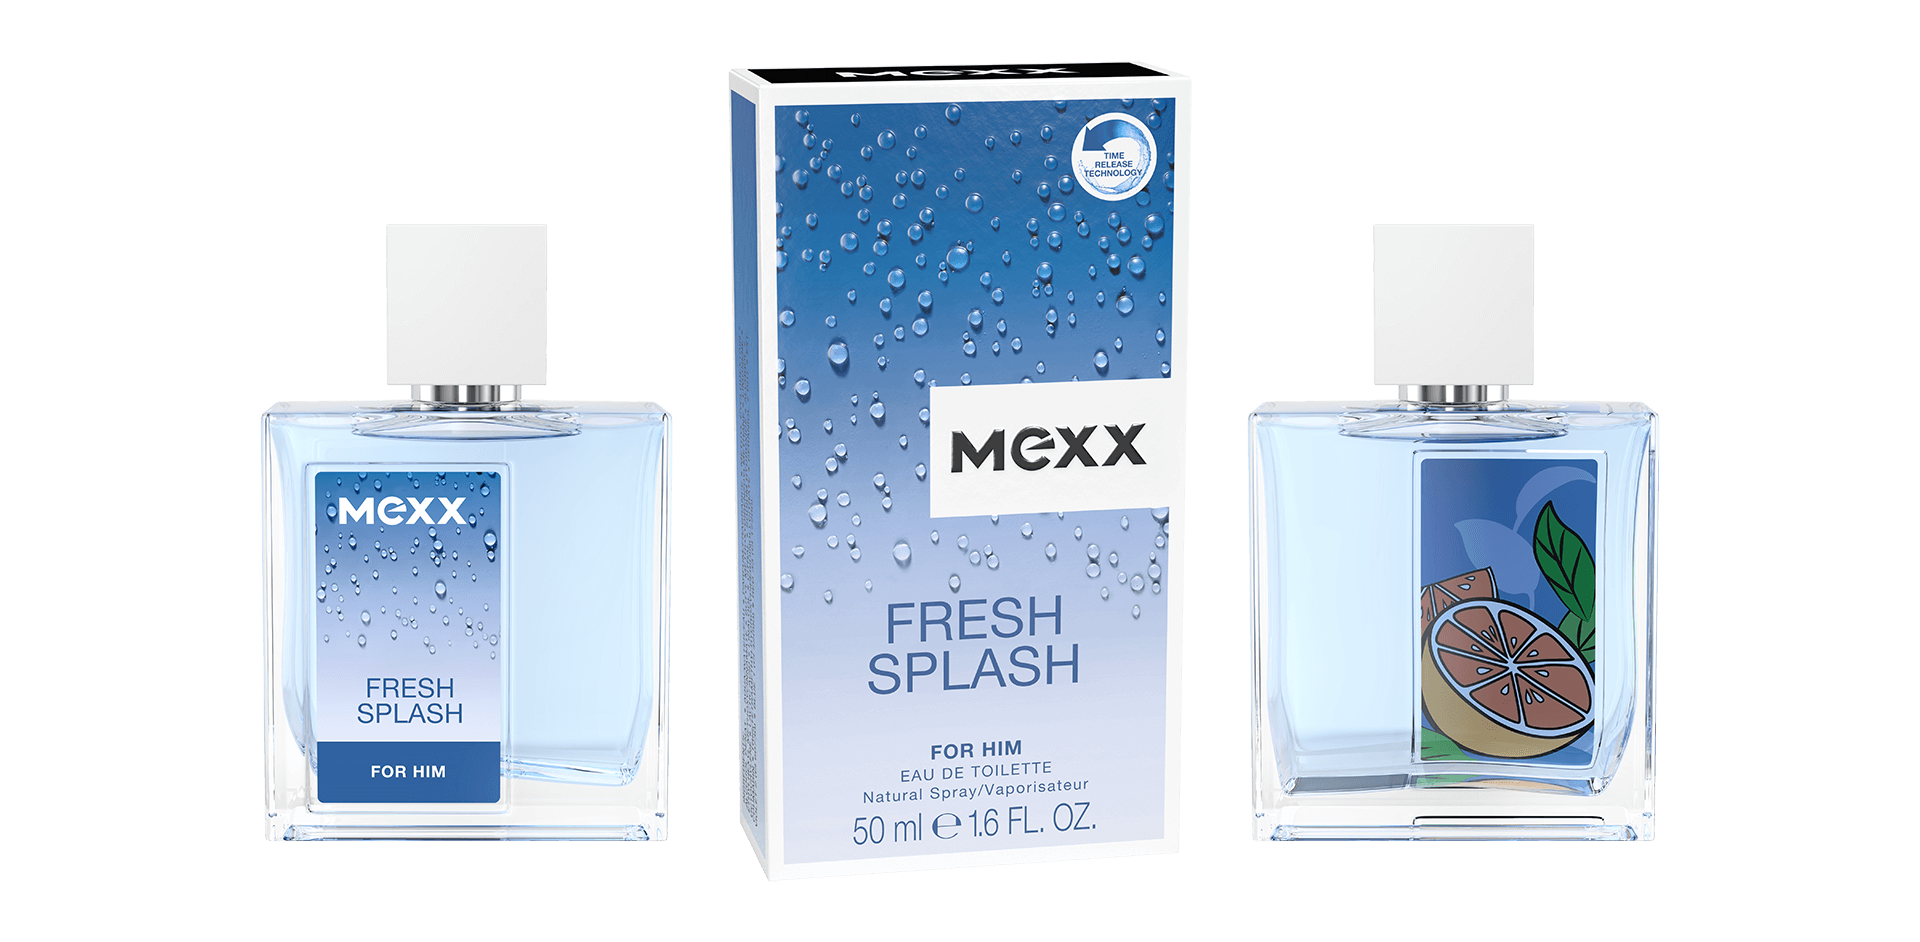 mexx fresh splash CGI